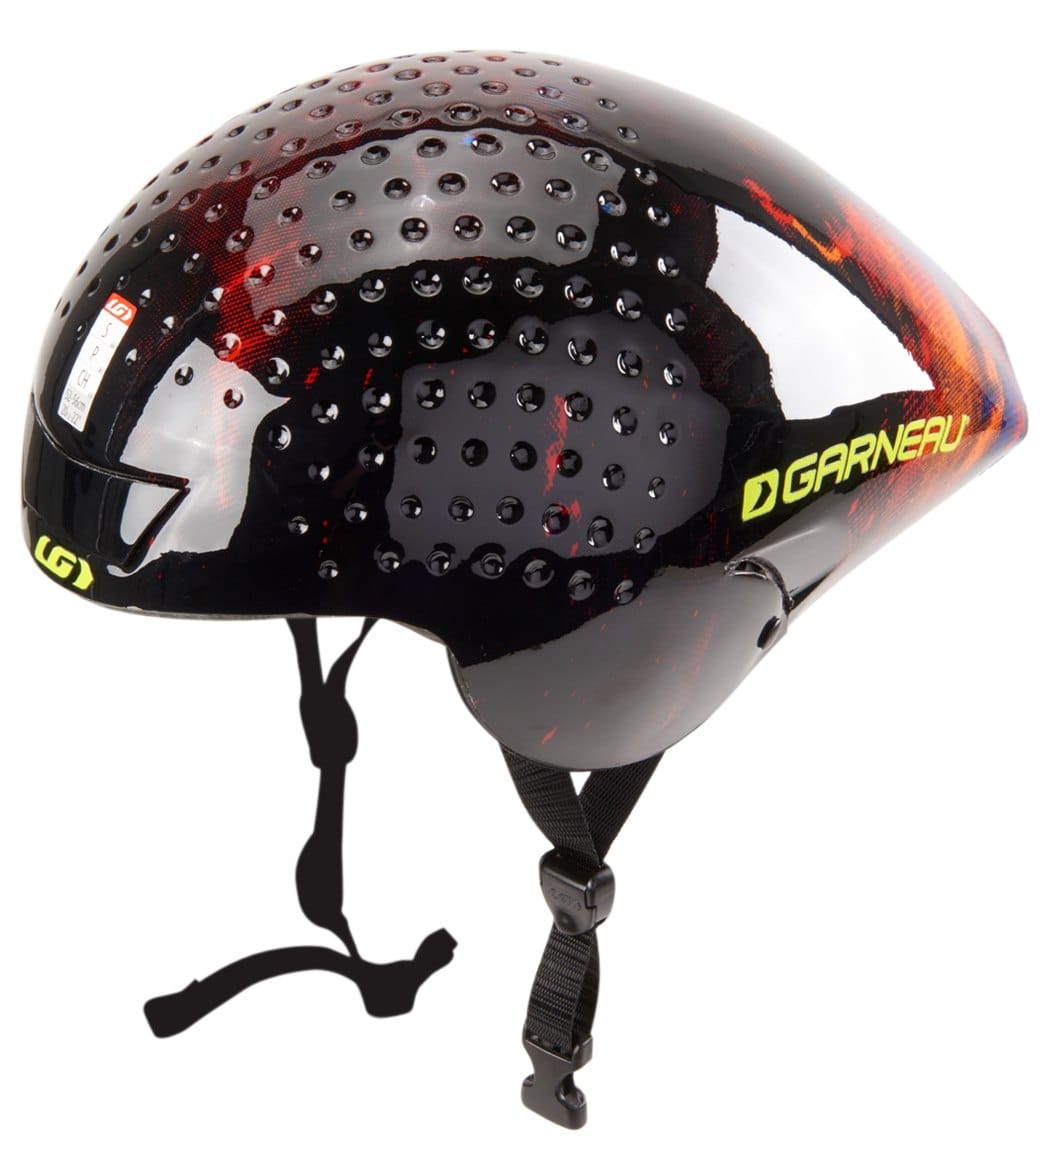 Louis Garneau P-09 Aero Cycling Helmet at 0 - Free Shipping